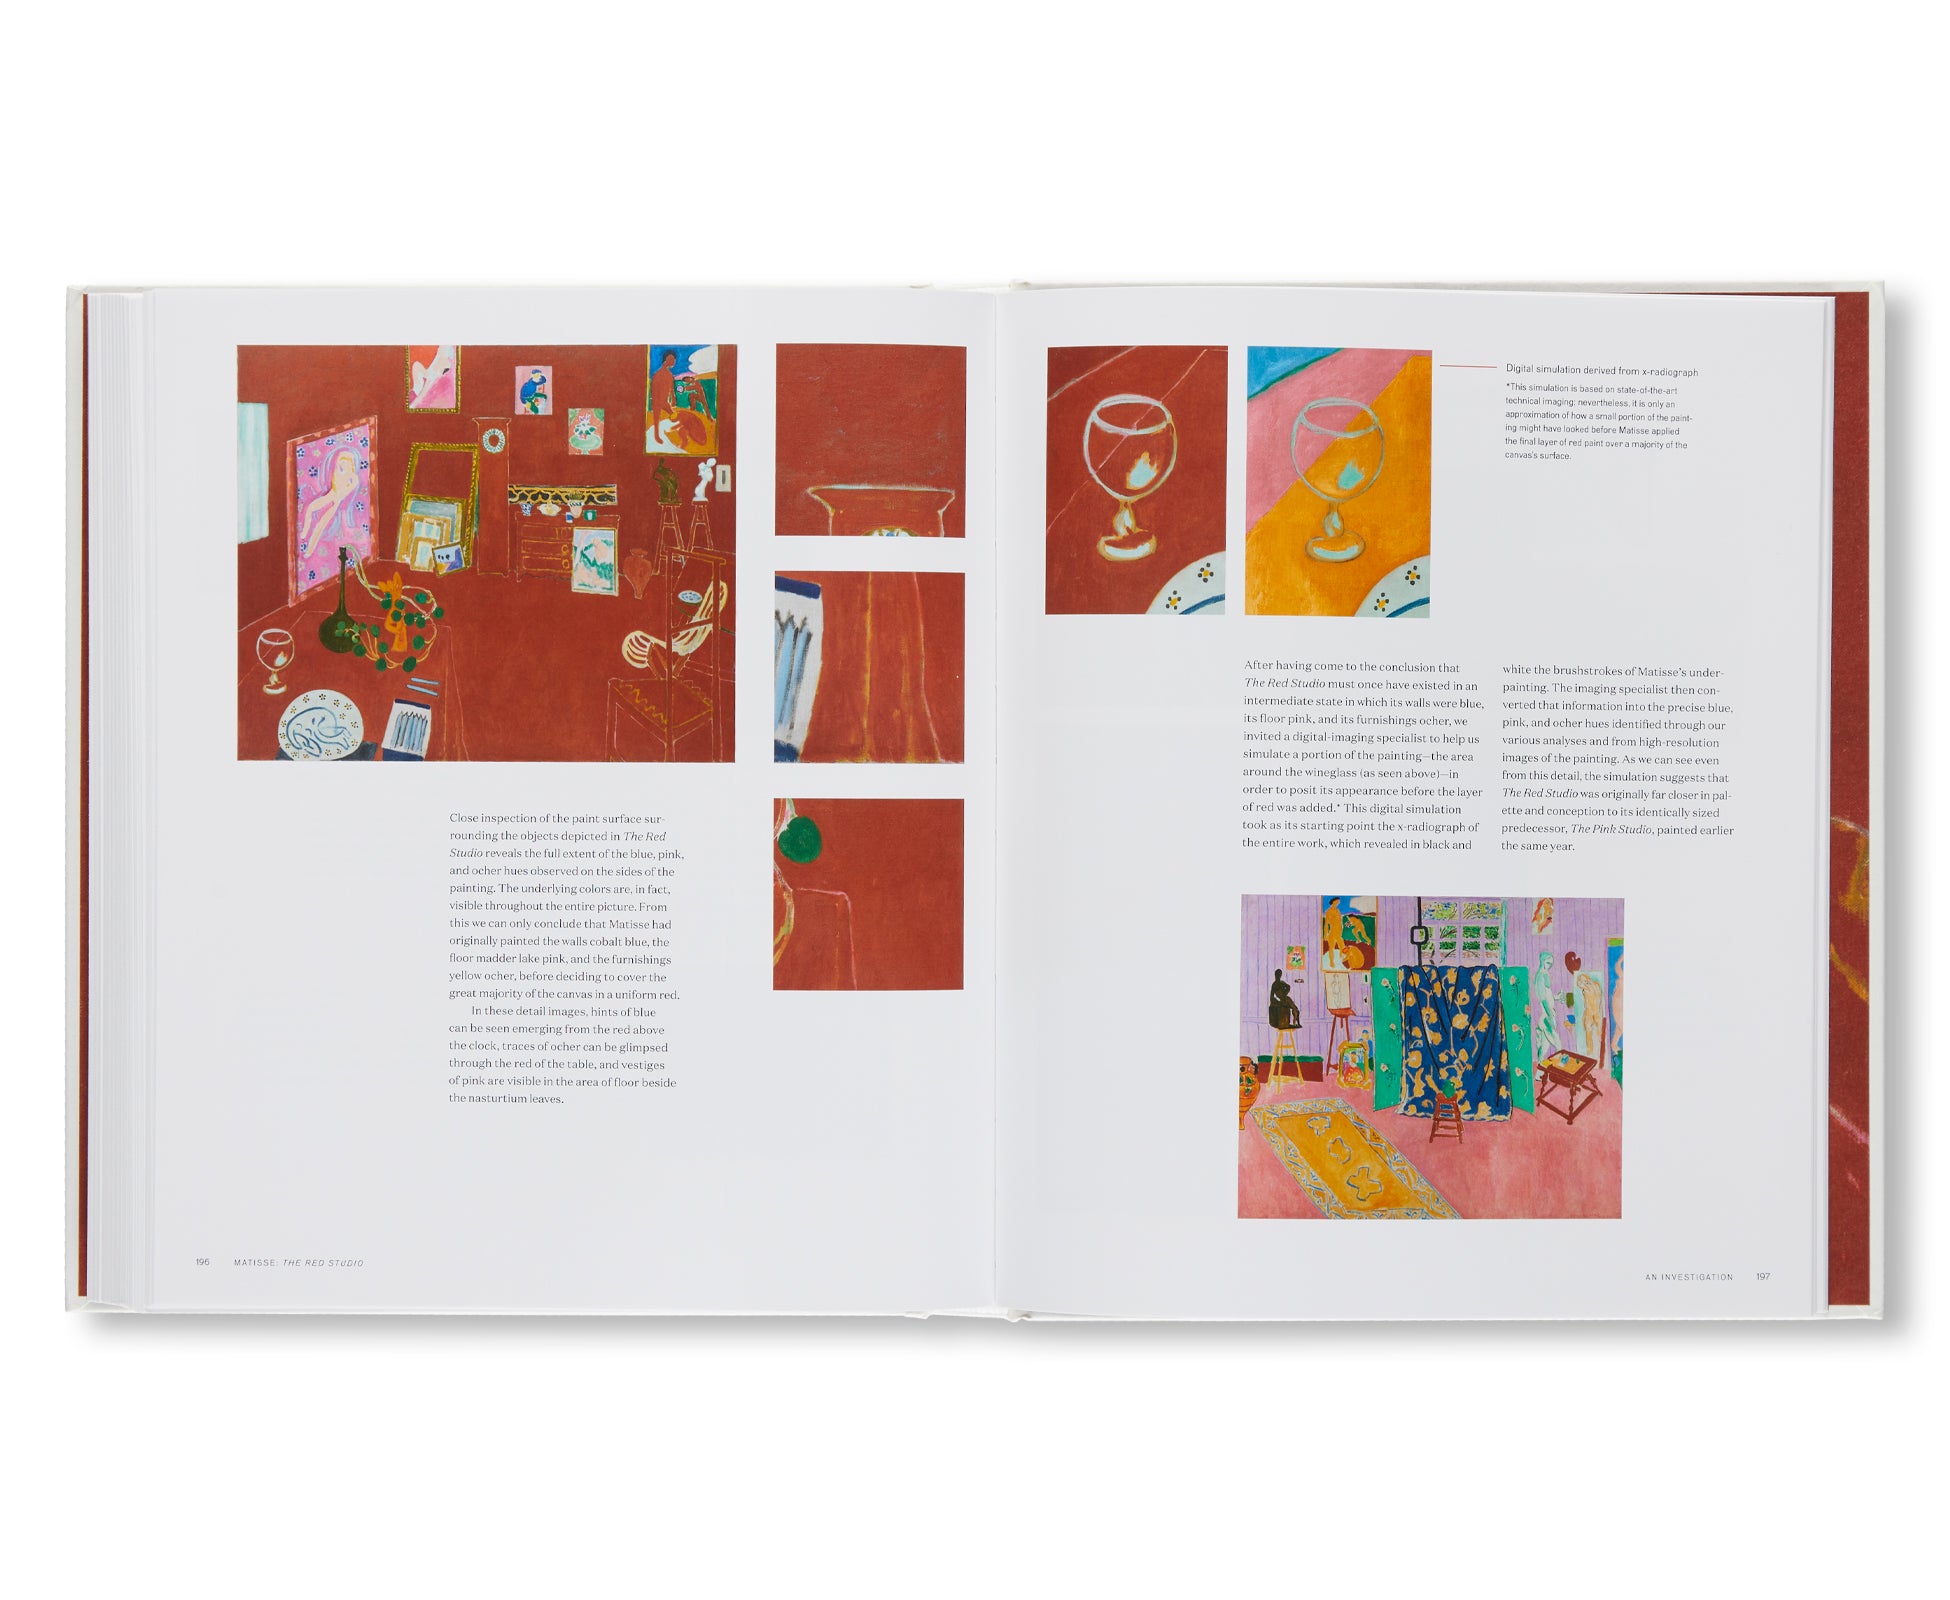 MATISSE: THE RED STUDIO by Henri Matisse